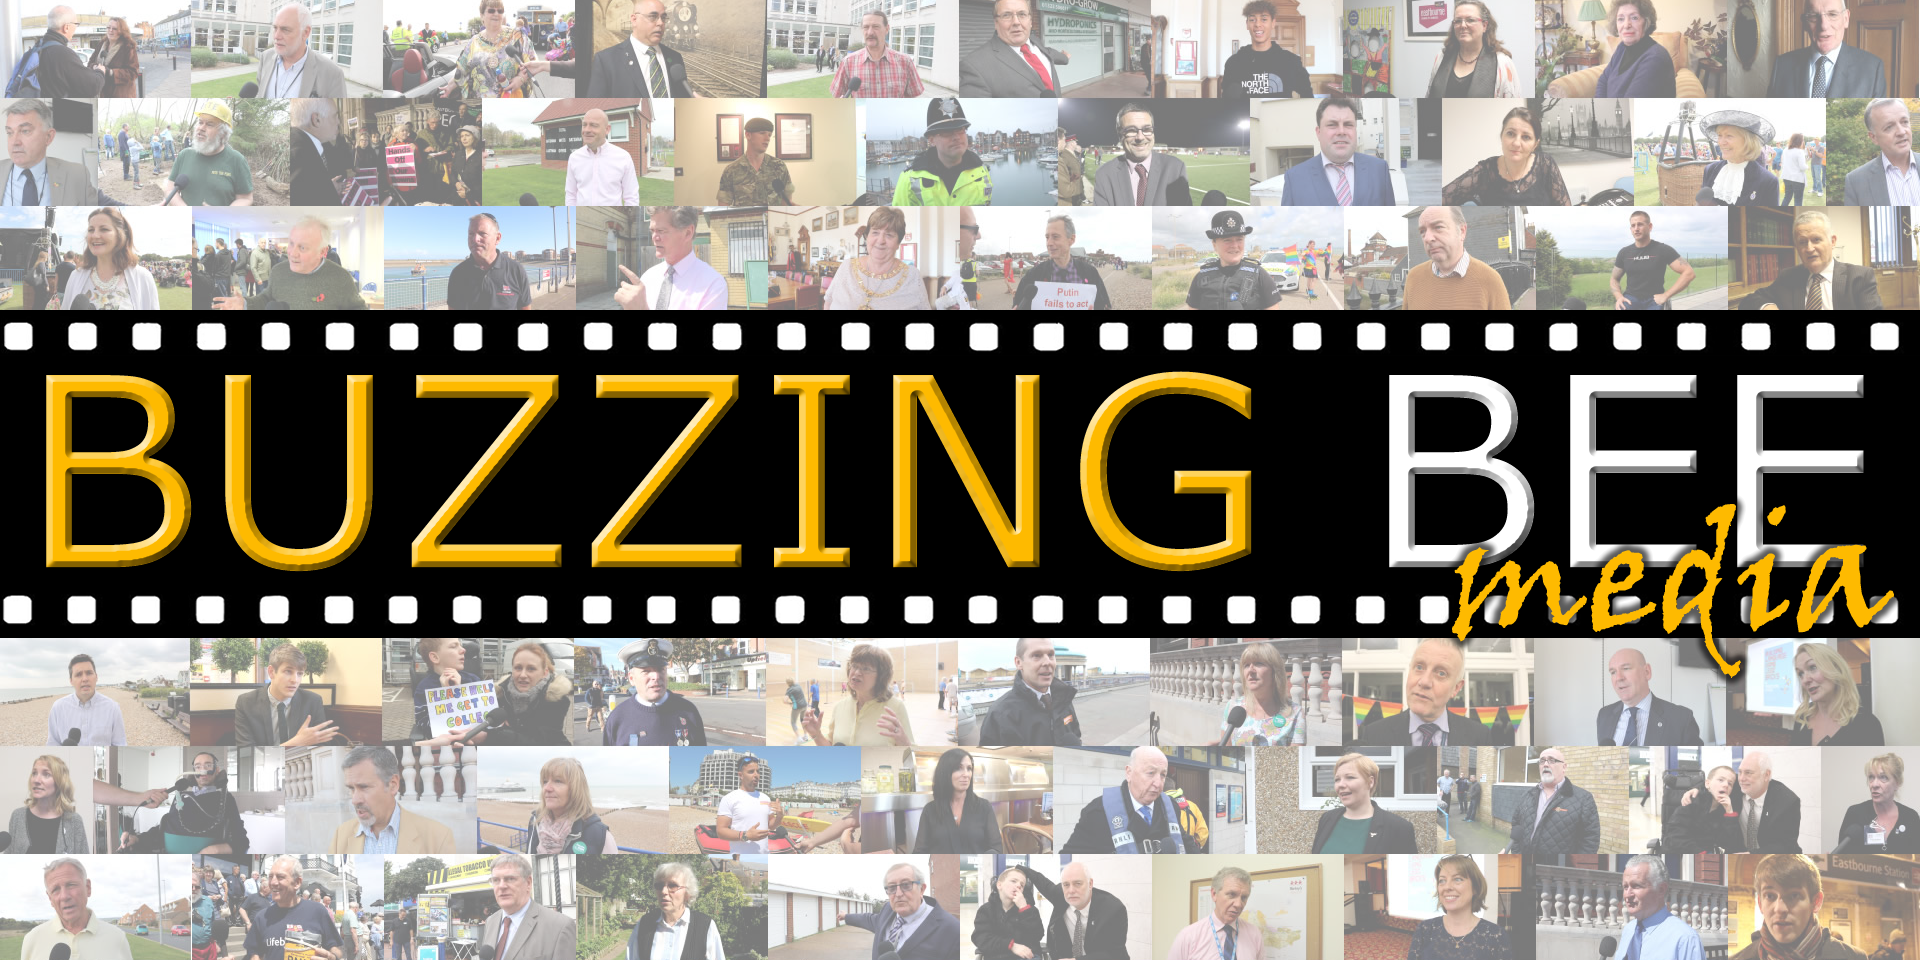 Buzzing Bee Media Ltd